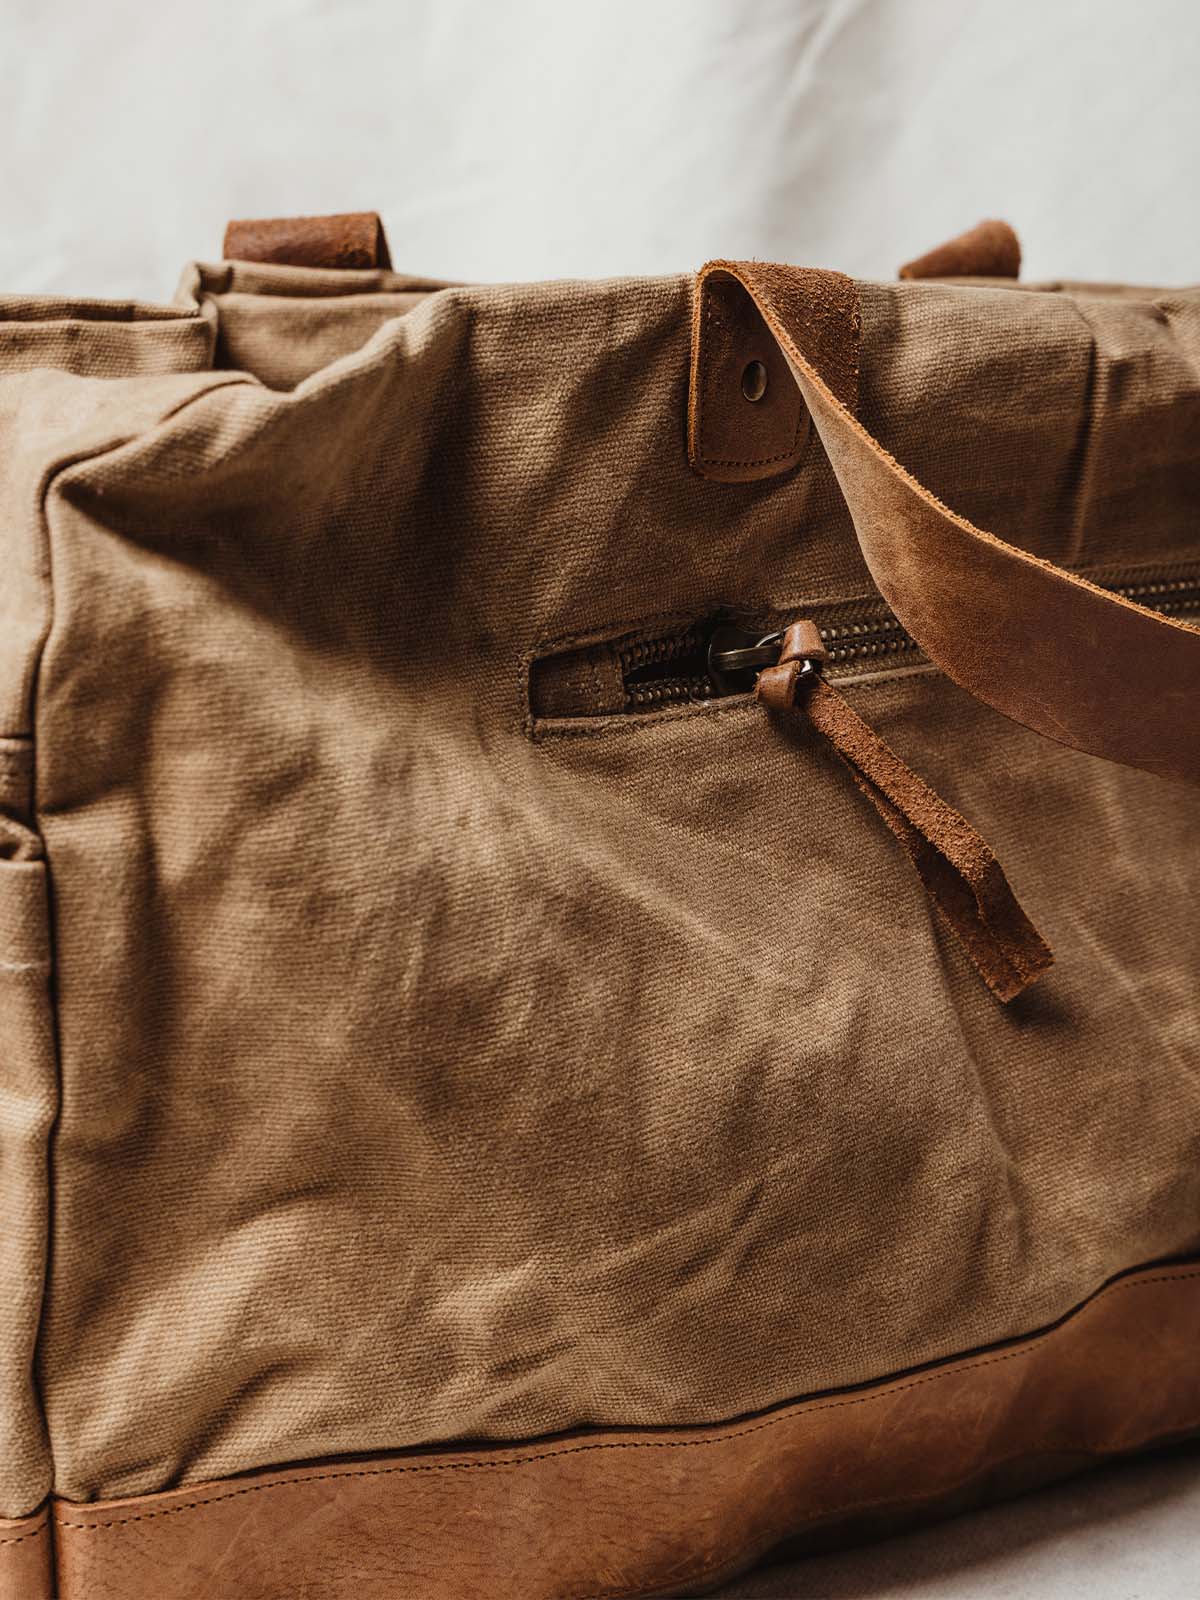 Tan weekender bag external zipper and leather details.